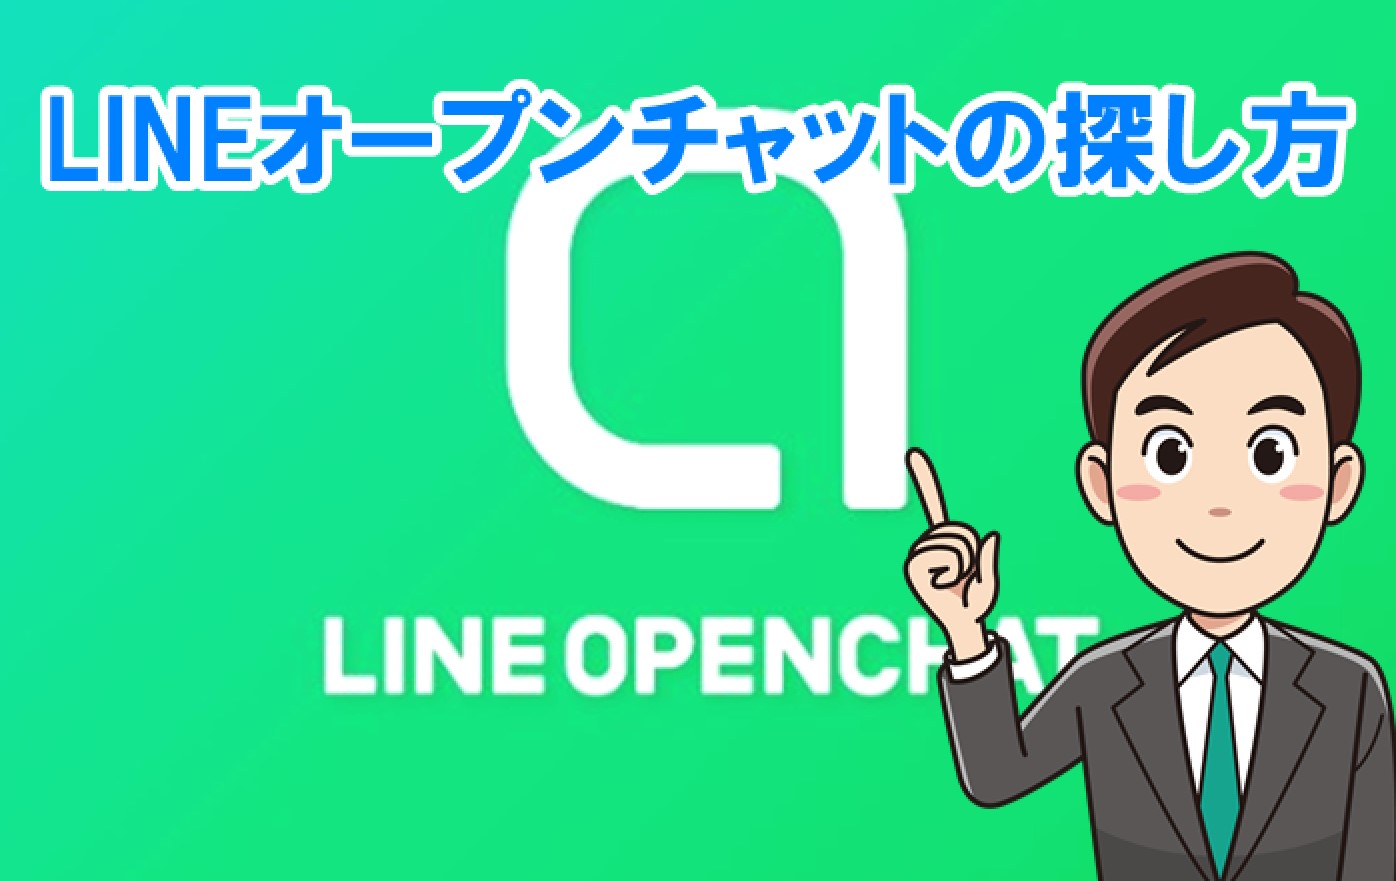 LINE \ g[N